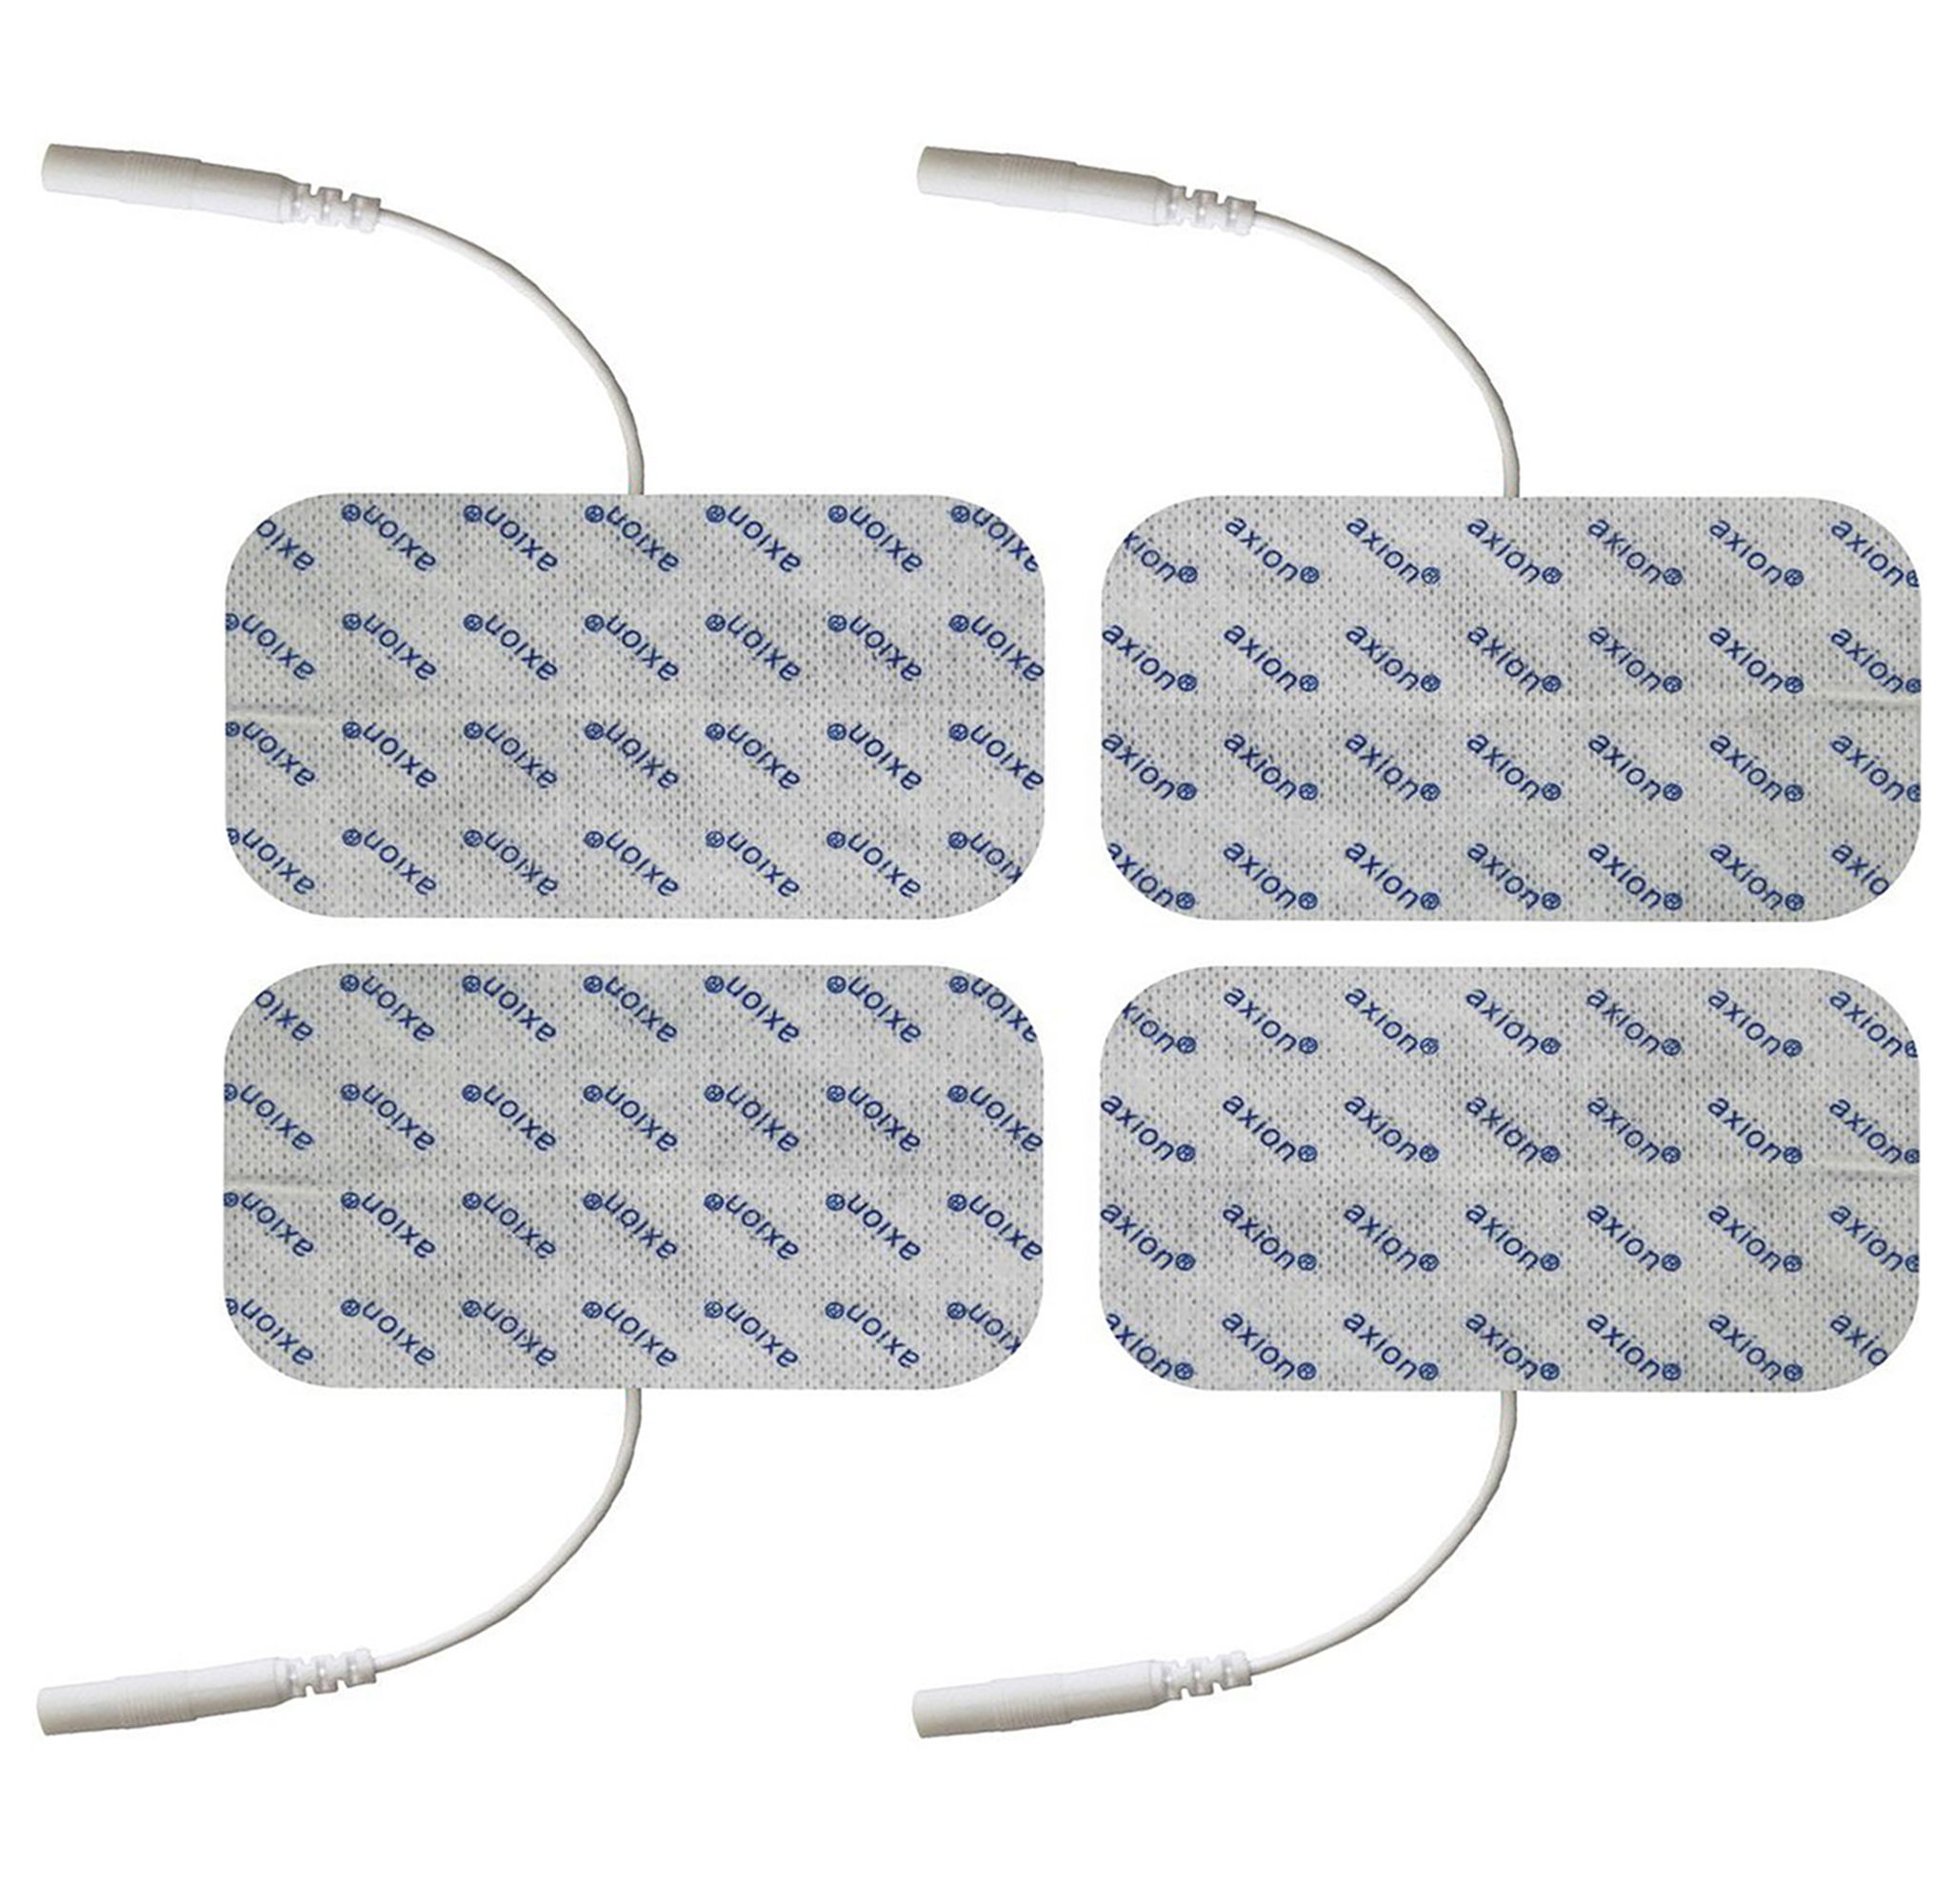 axion selbstklebende Elektrodenpads 10x5 cm – passend zu axion, Prorelax, Promed, etc.